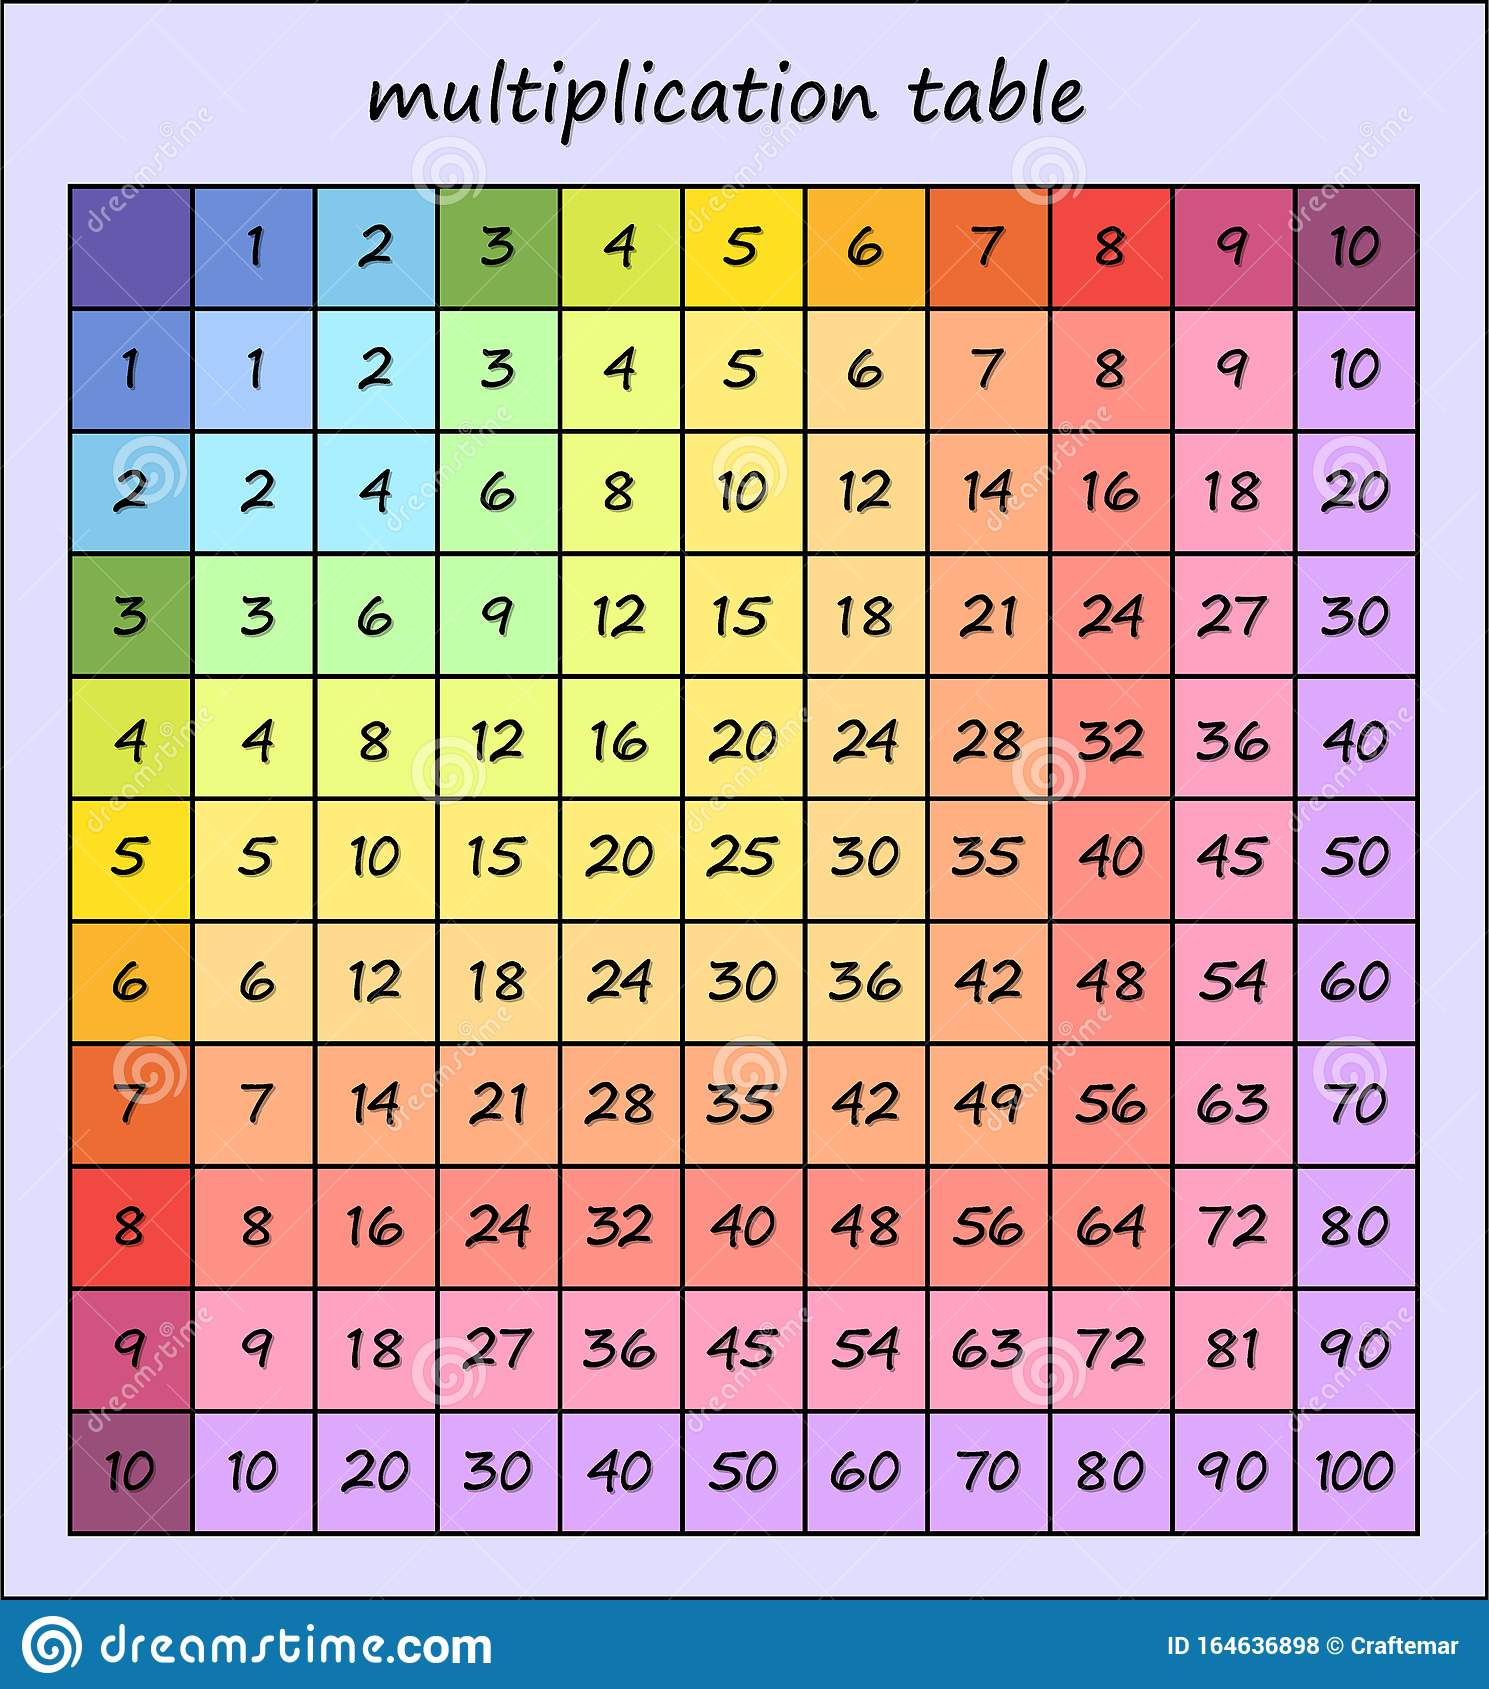 multiplication-flash-cards-printable-free